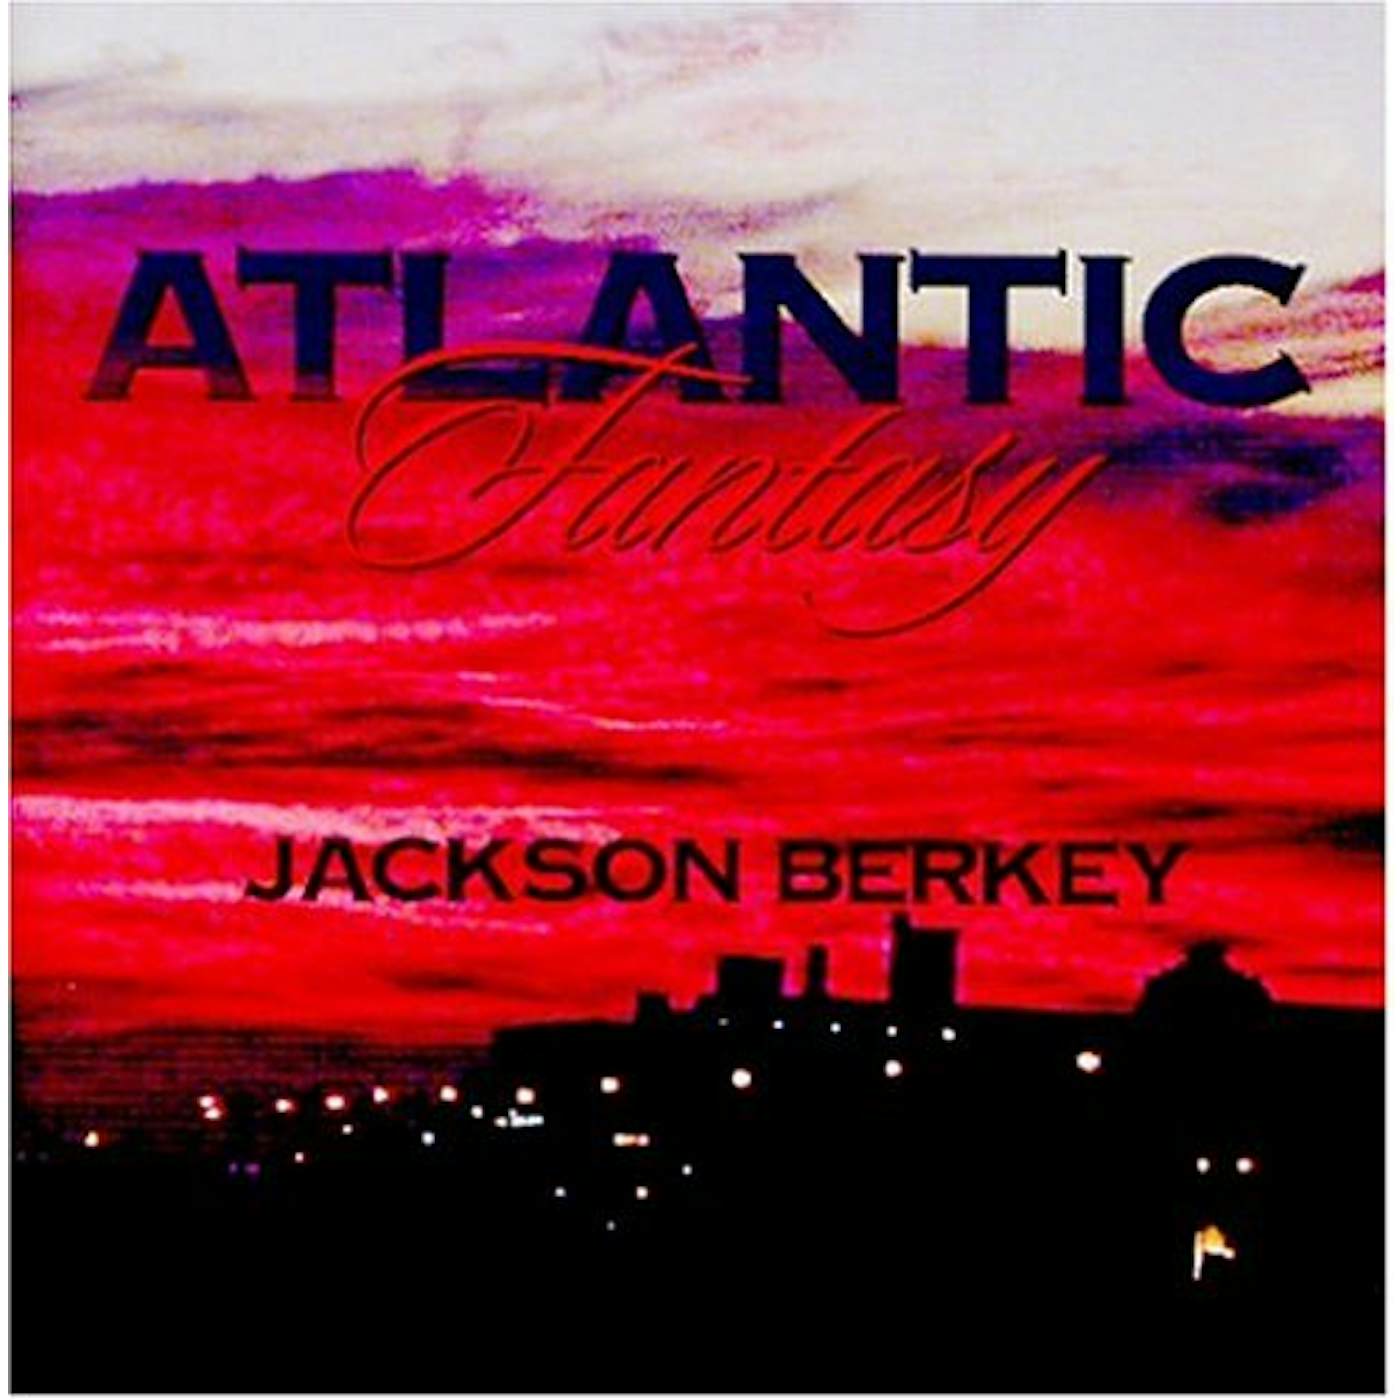 Jackson Berkey ATLANTIC FANTASY CD